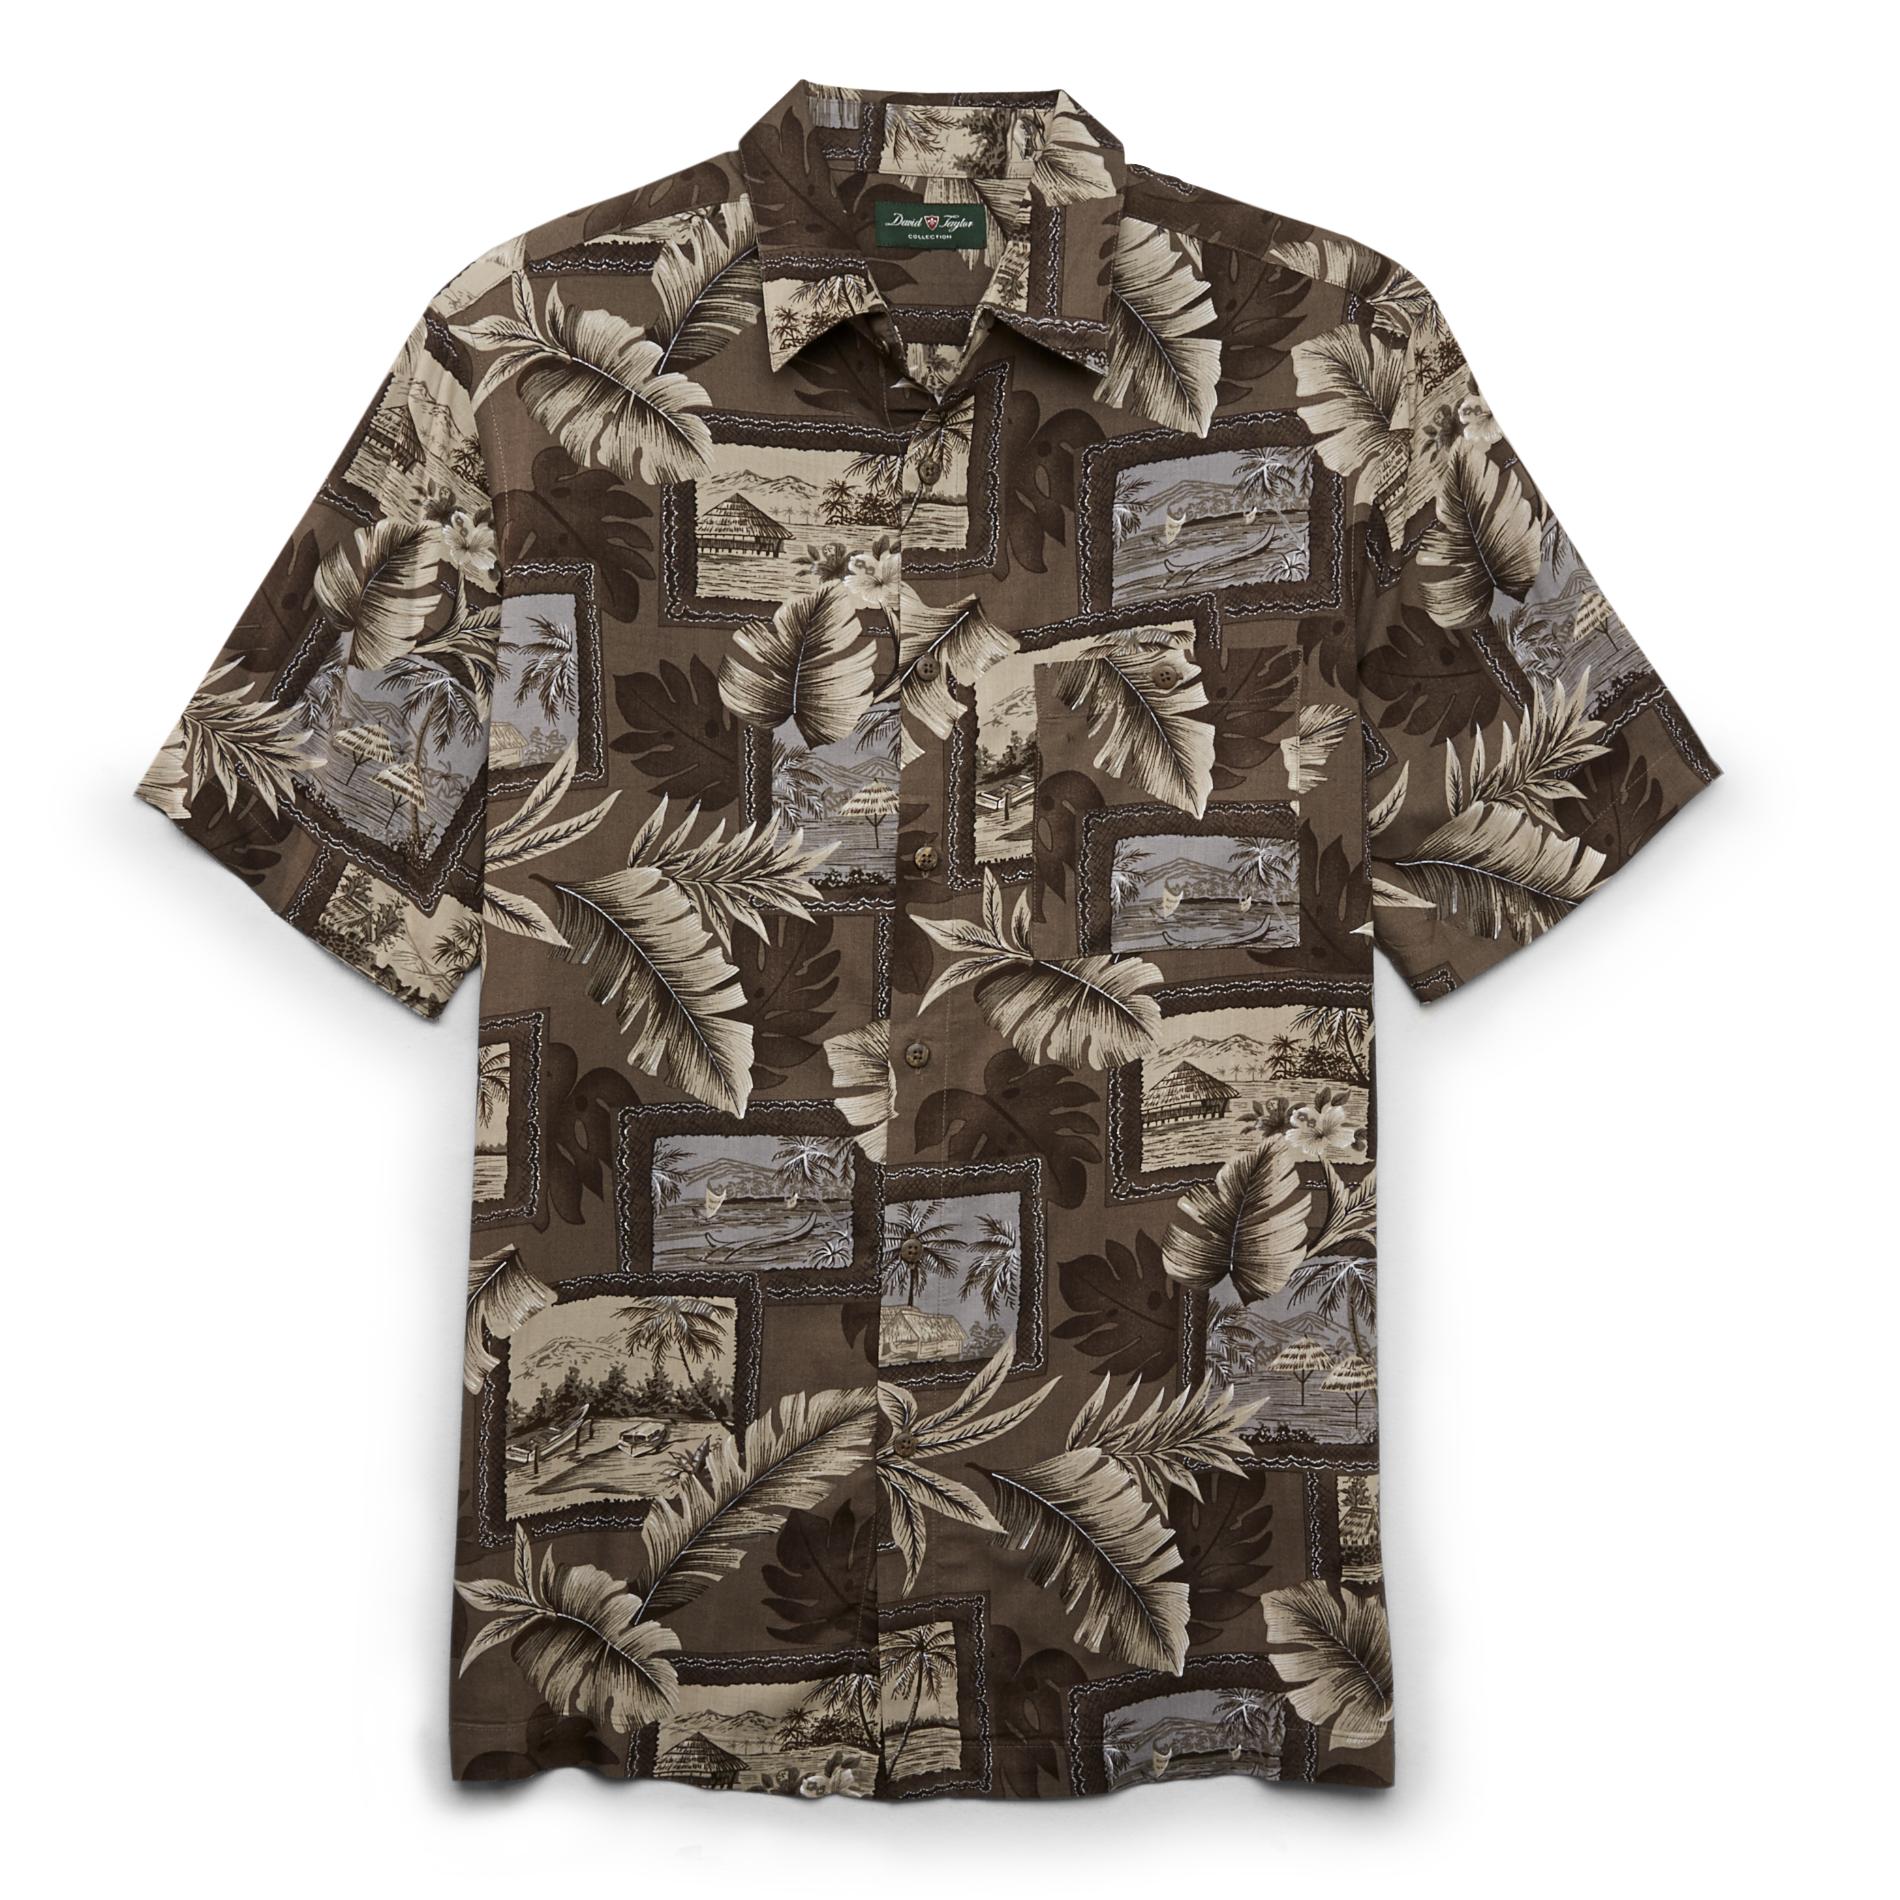 David Taylor Collection Men's Big & Tall Short-Sleeve Button-Front Shirt - Beaches